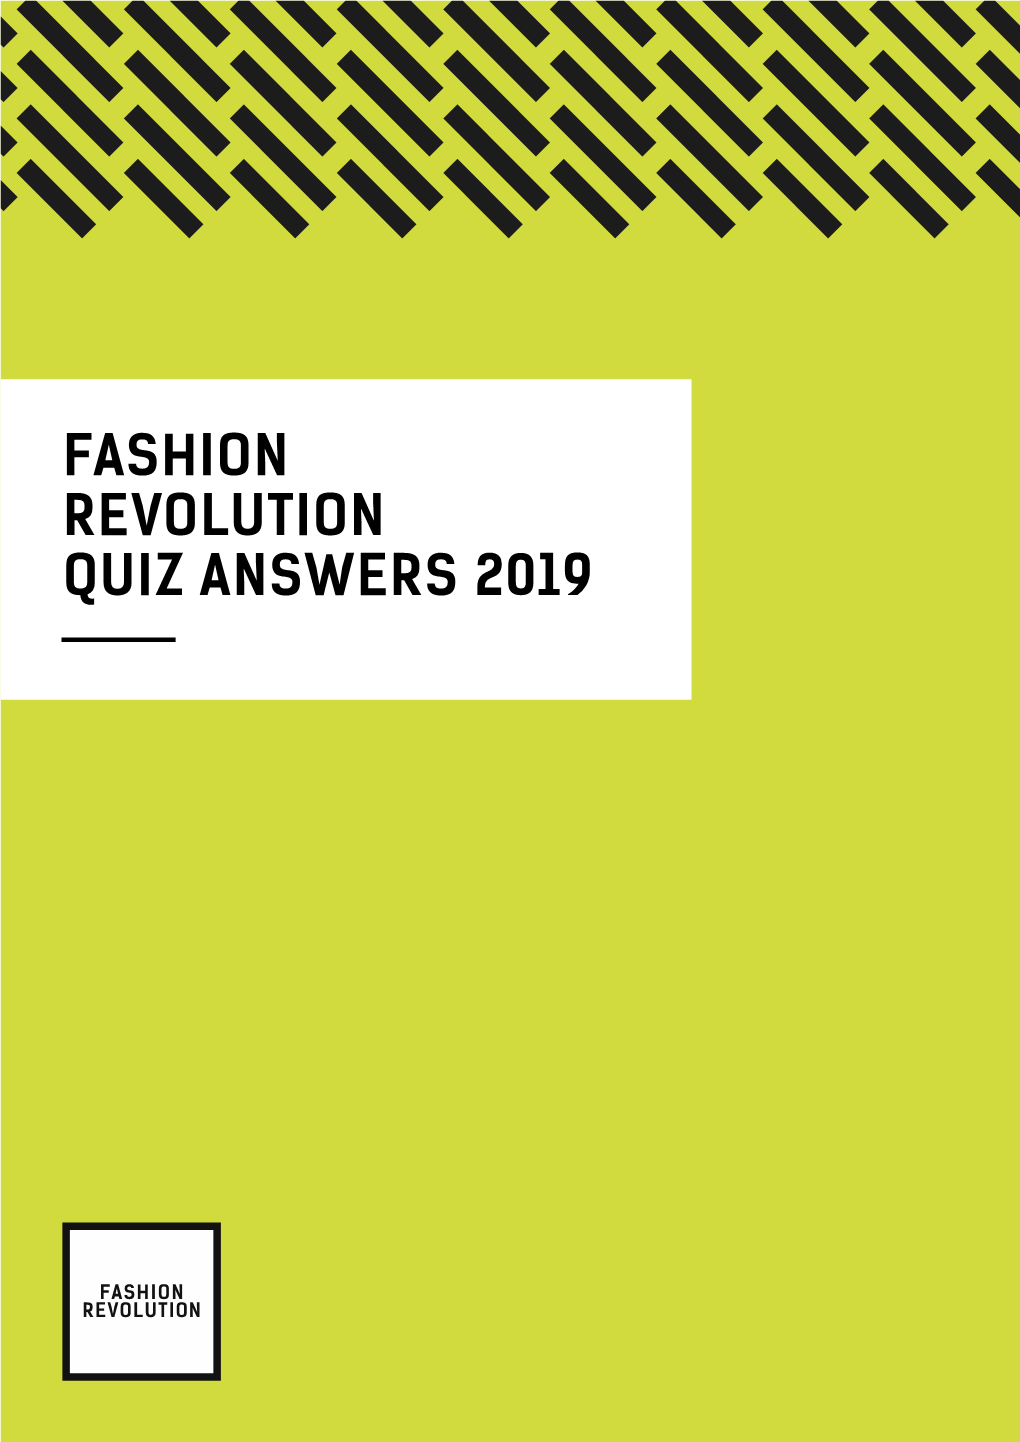 Fashion Revolution Quiz 2019 Answers